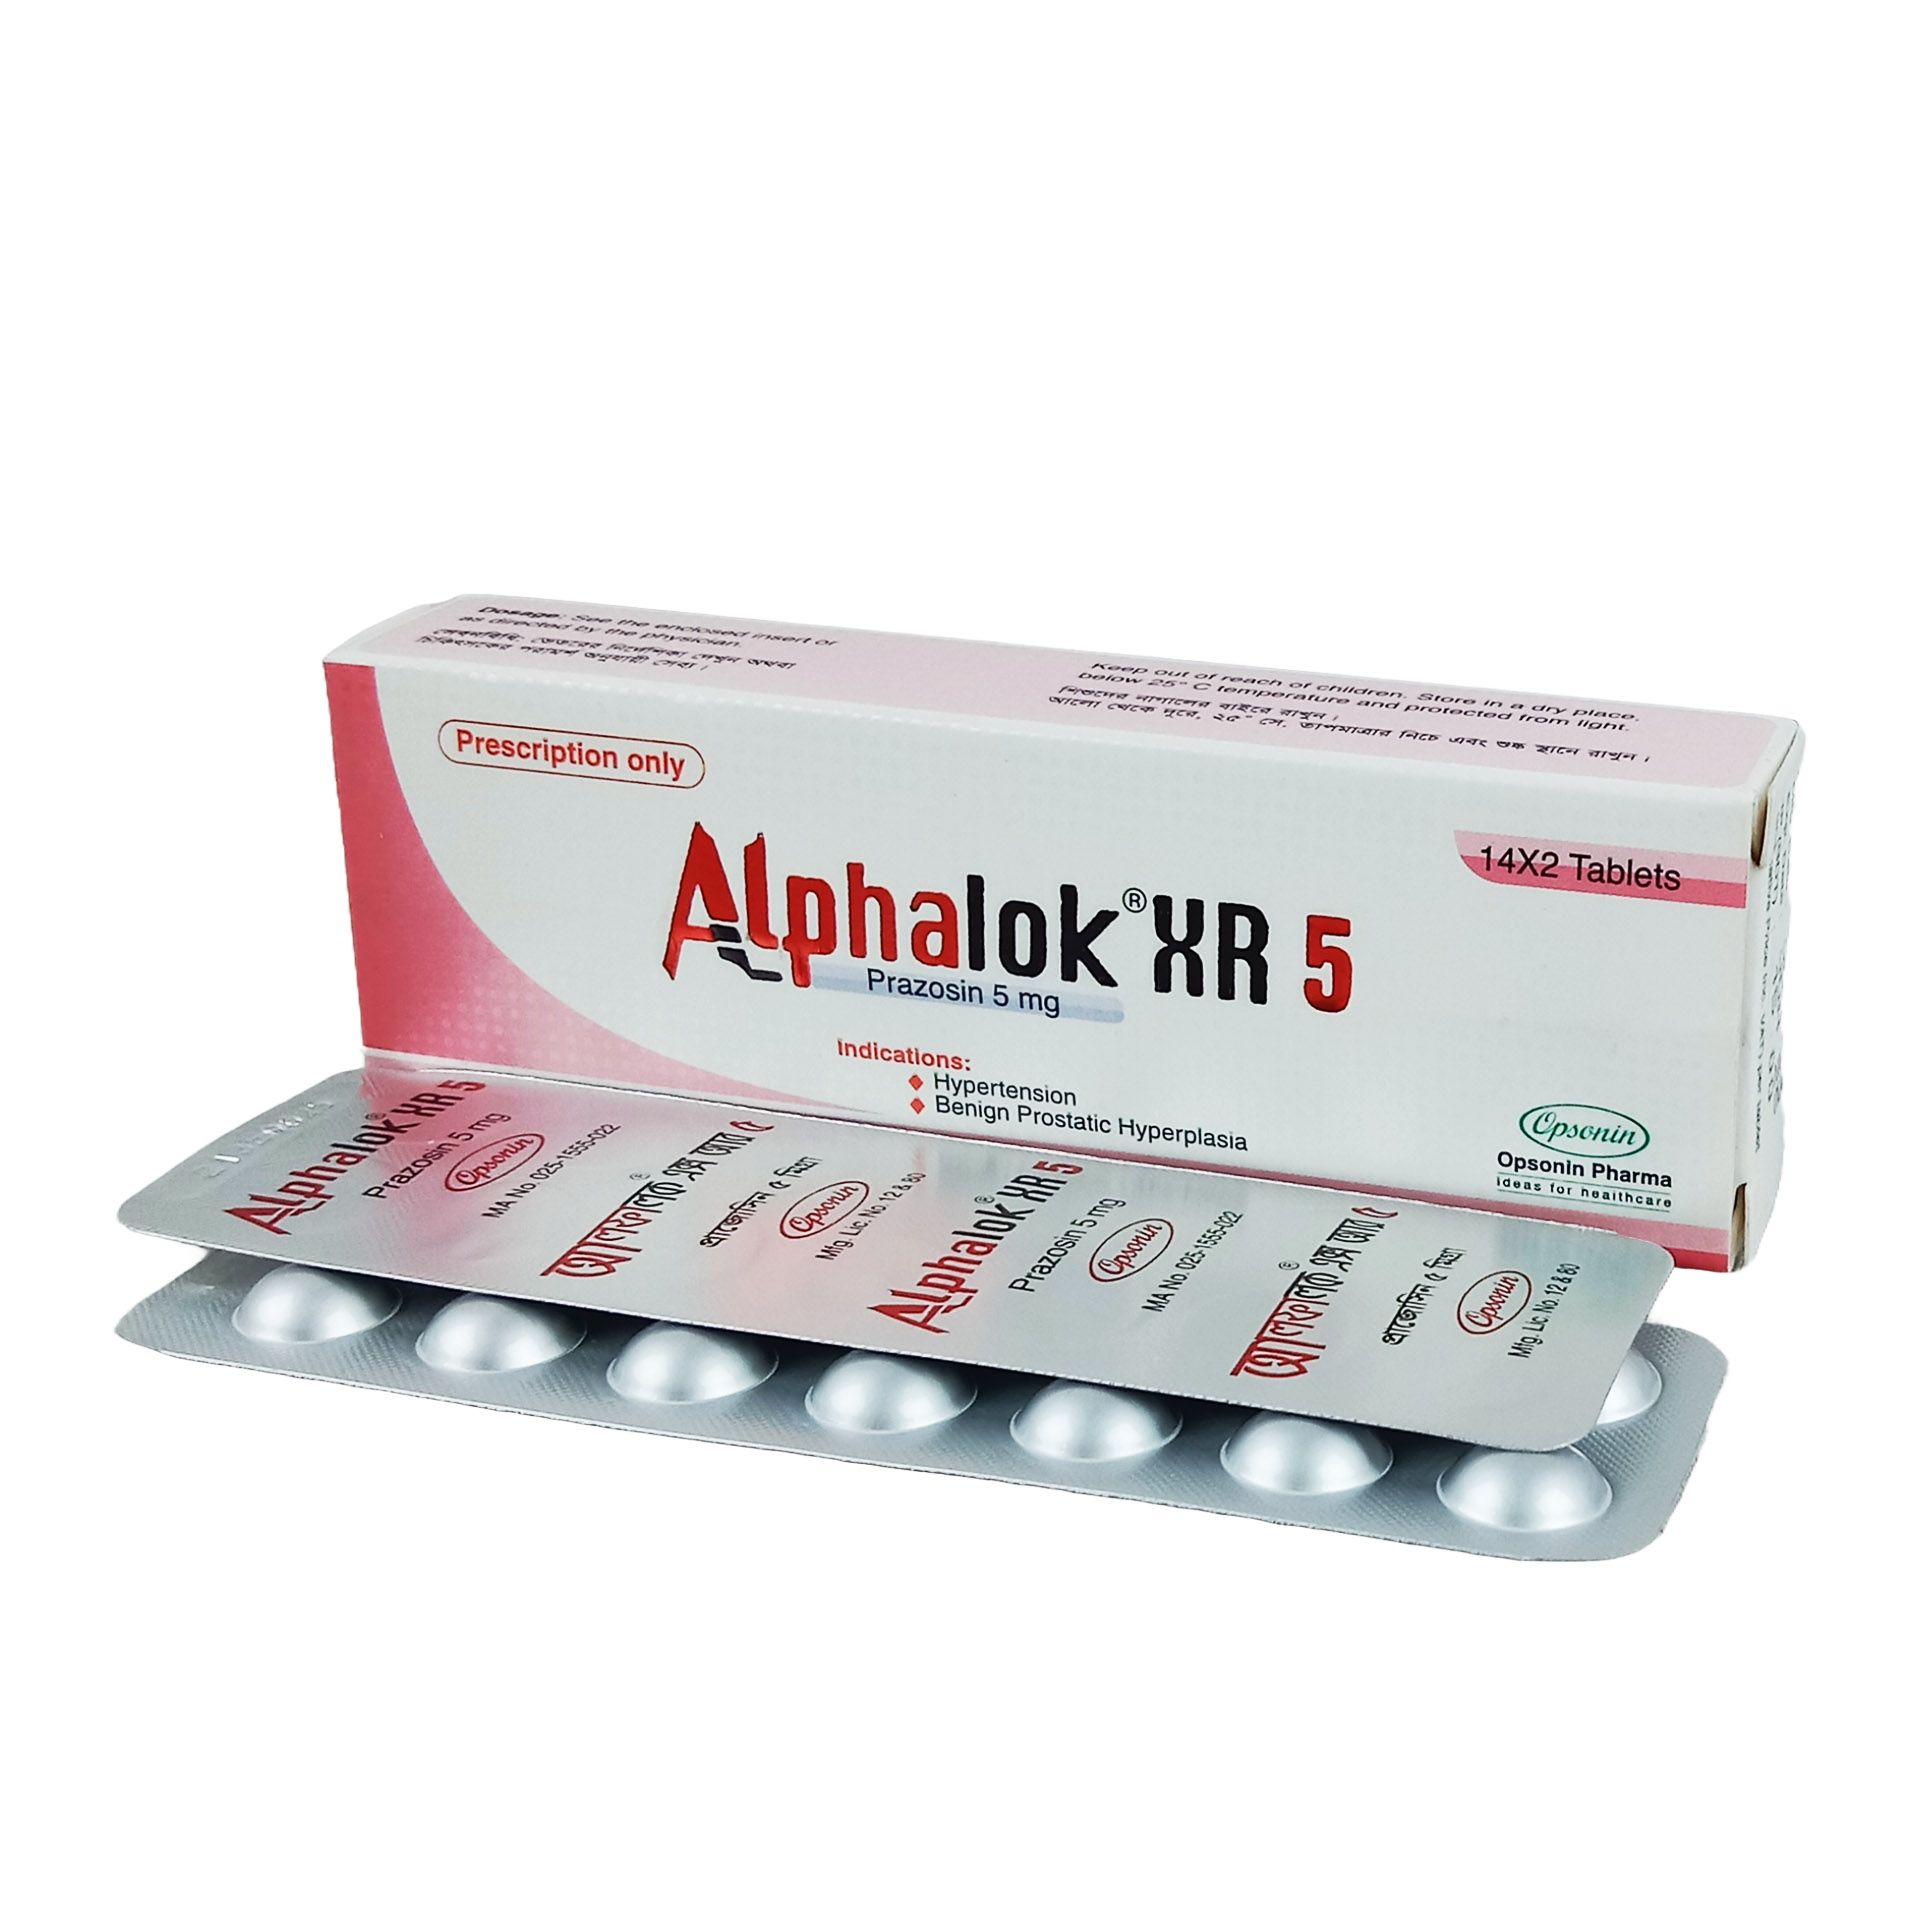 Alphalok XR 5 5 mg Tablet